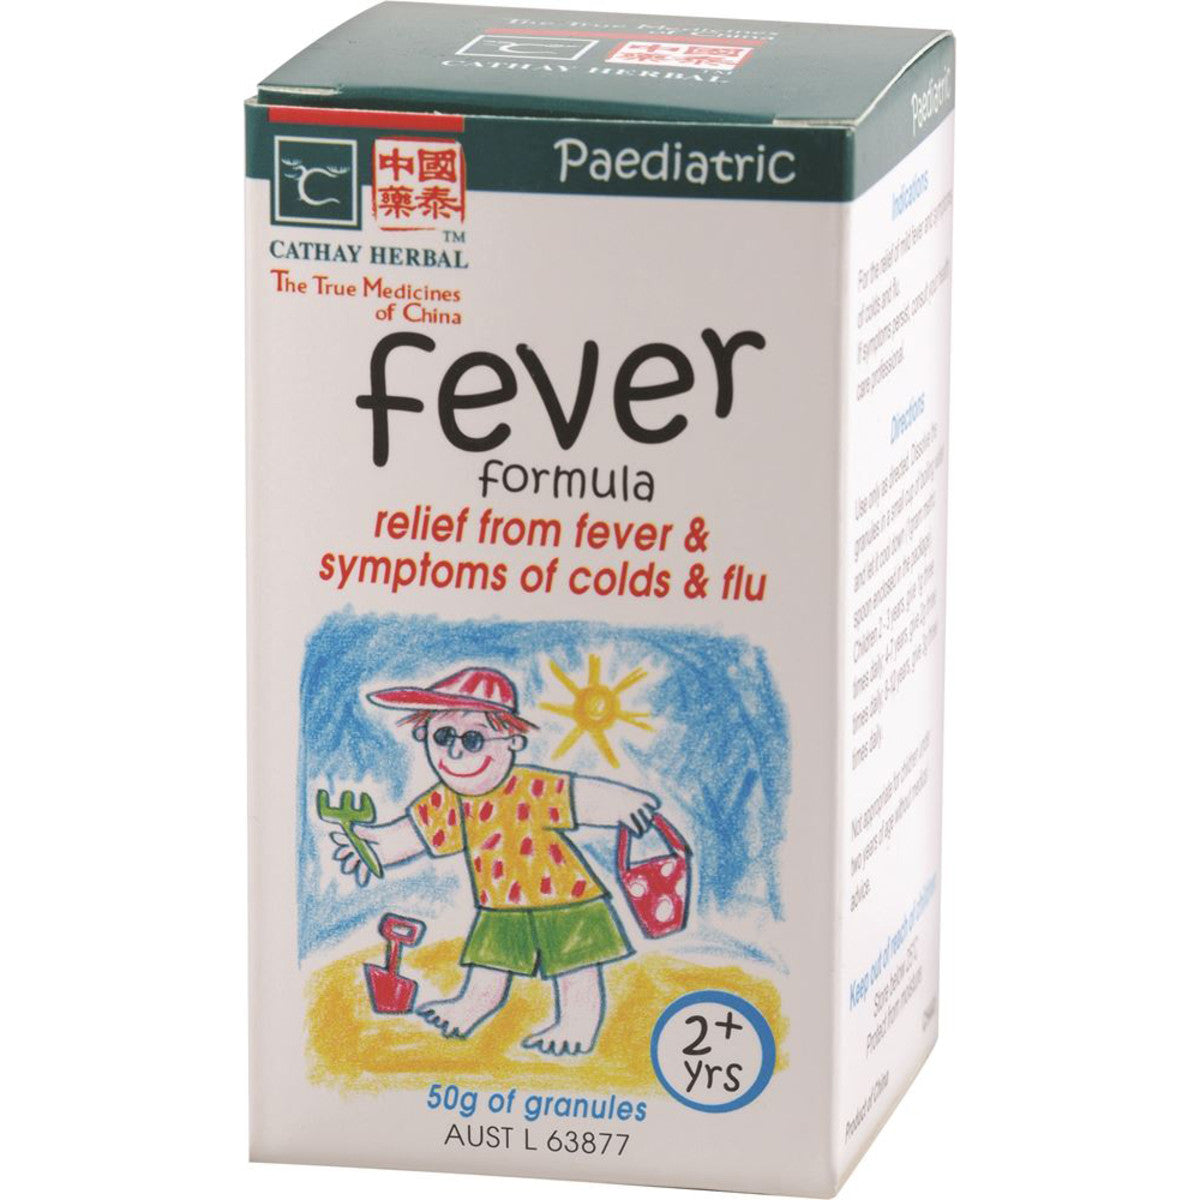 Cathay Herbal - Paediatric Fever Formula